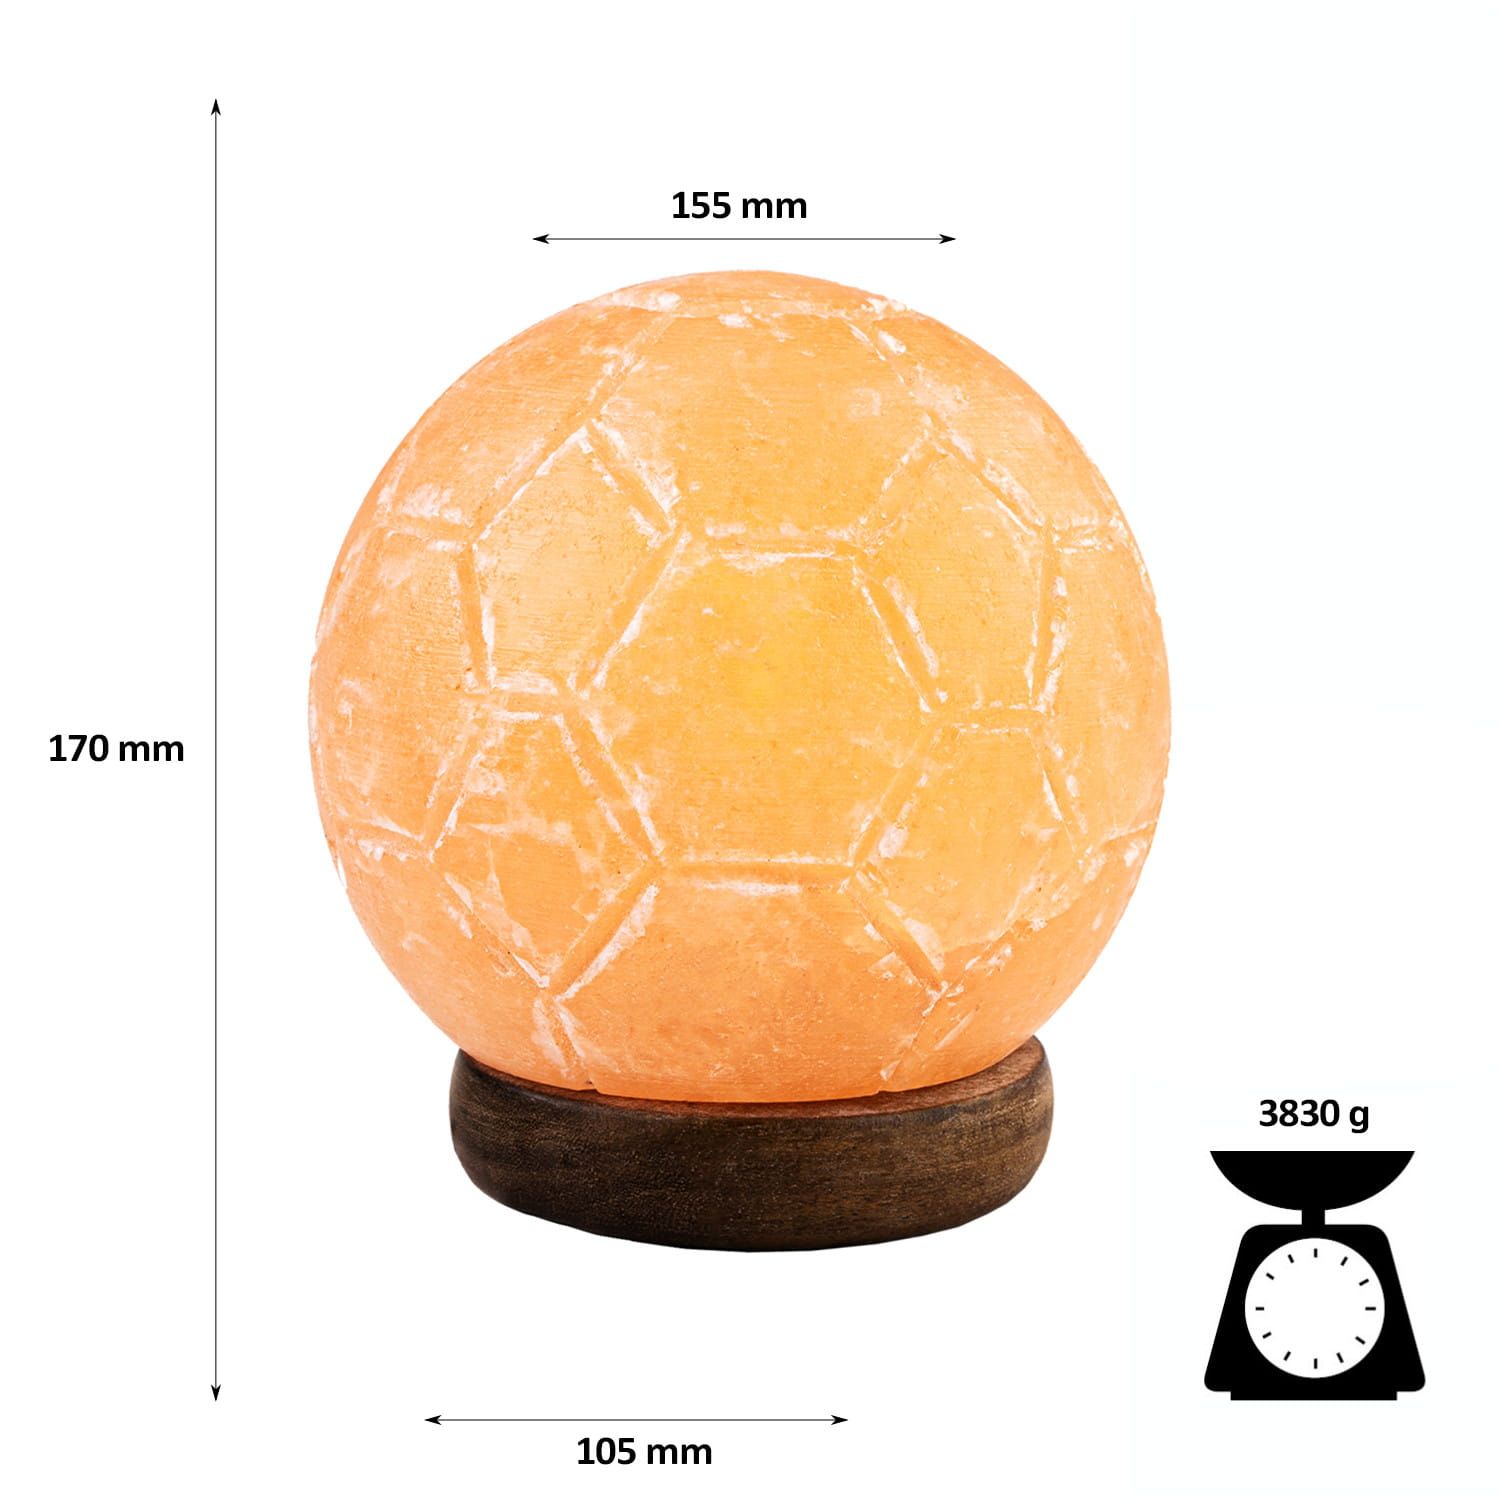 Lampa solna okrągła kula piłka nożna naturalna z soli himalajskiej